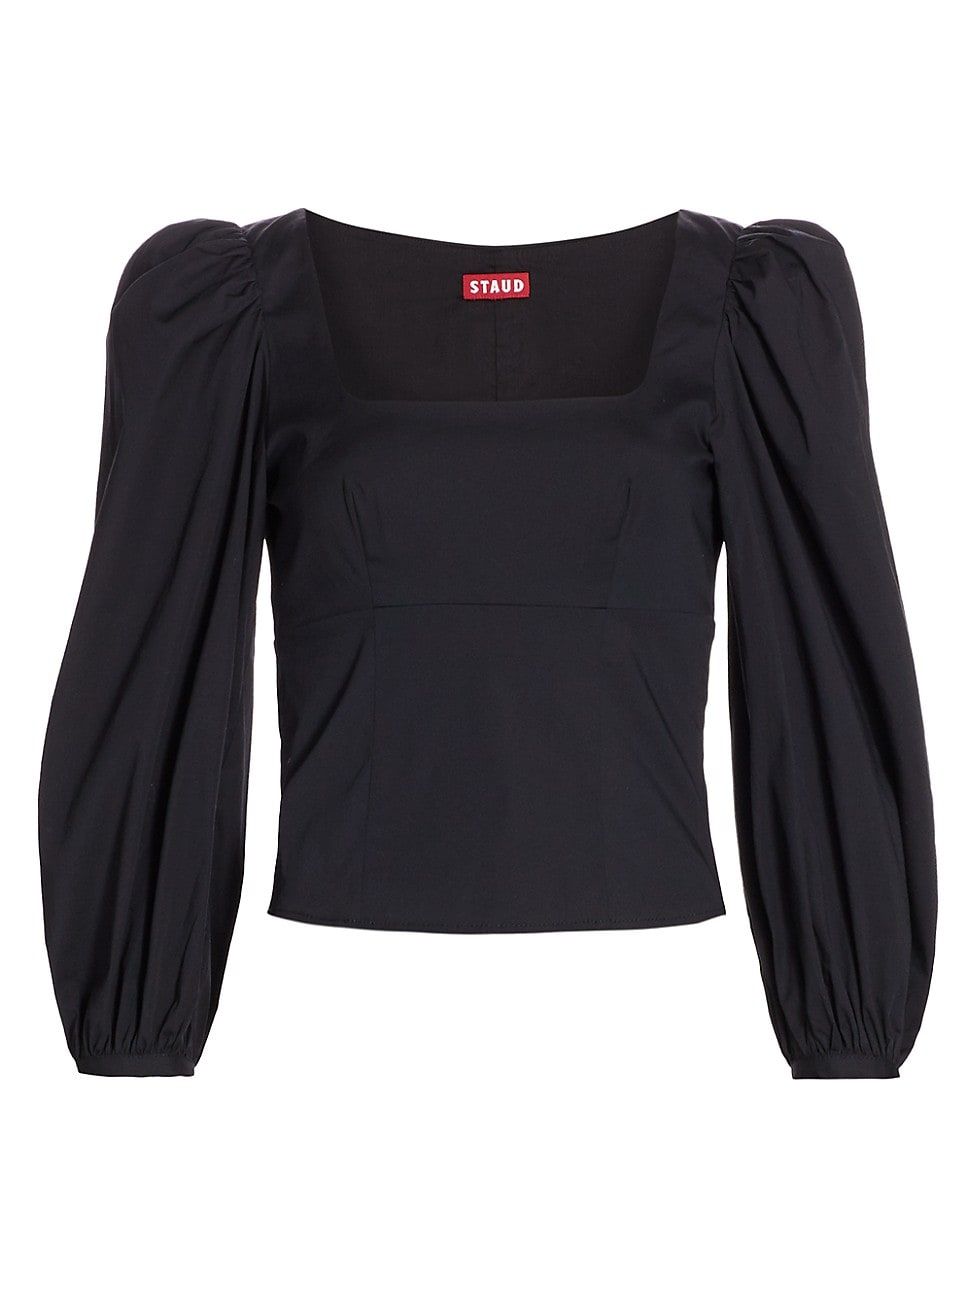 Staud Women's Lana Puff-Sleeve Top - Black - Size 0 | Saks Fifth Avenue